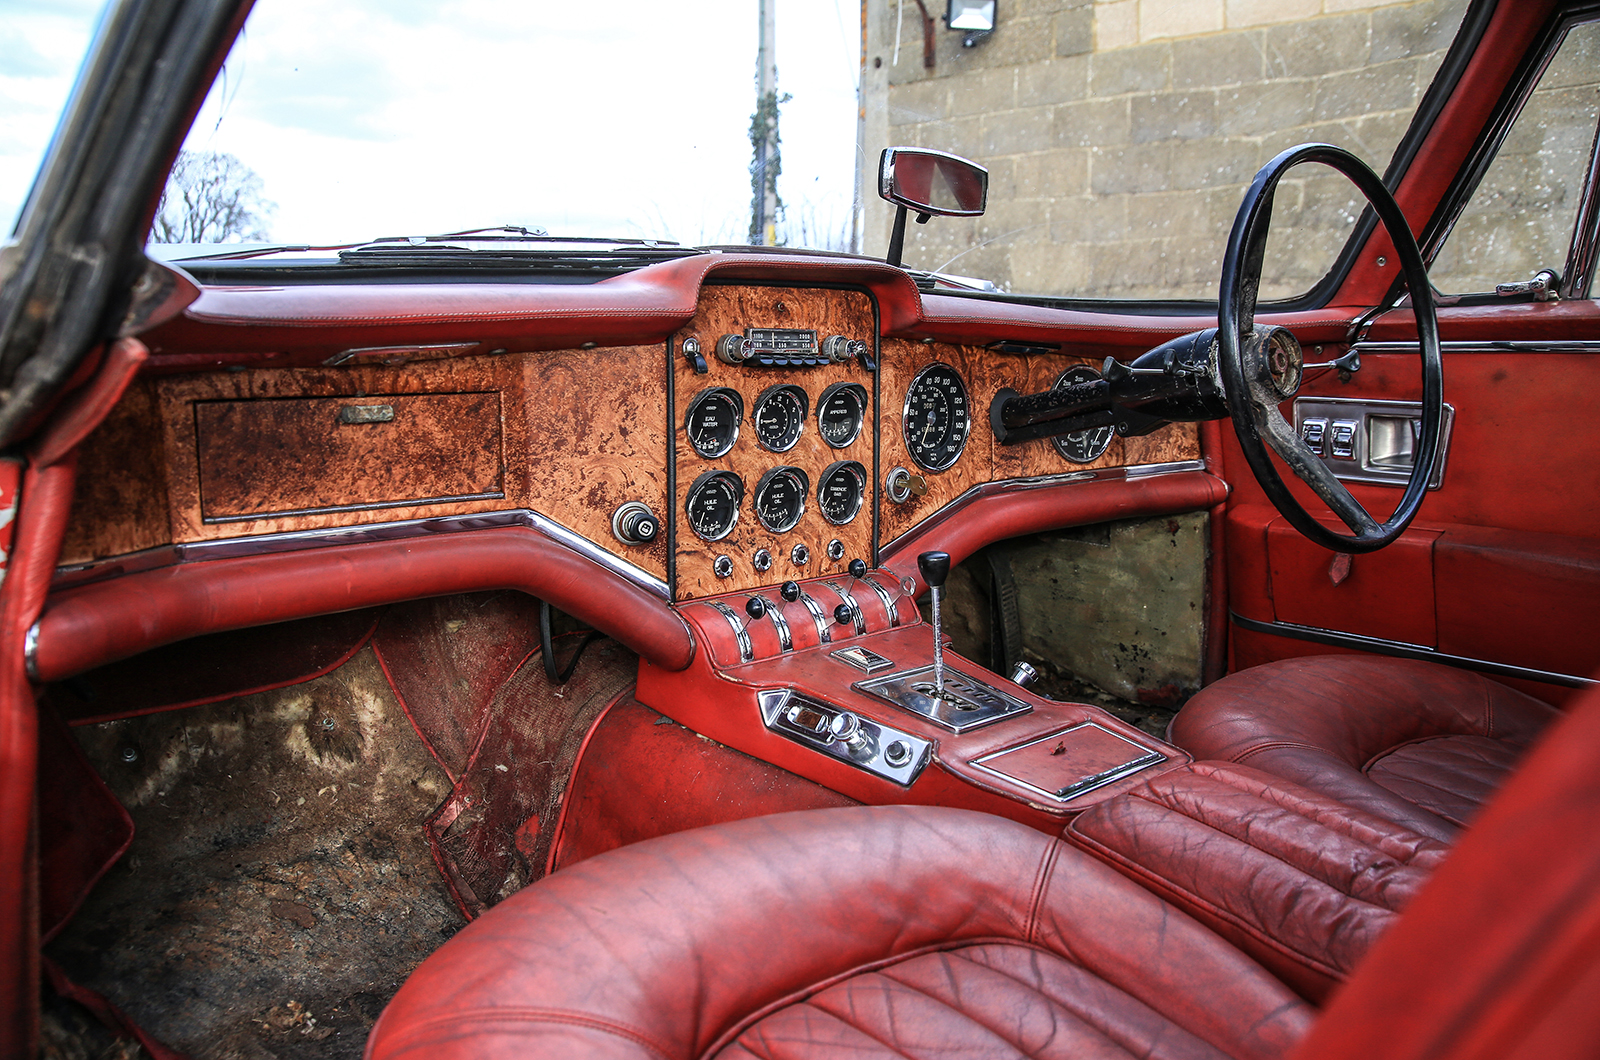 Classic & Sports Car – Barn-find Facel Vega show car to go under the hammer